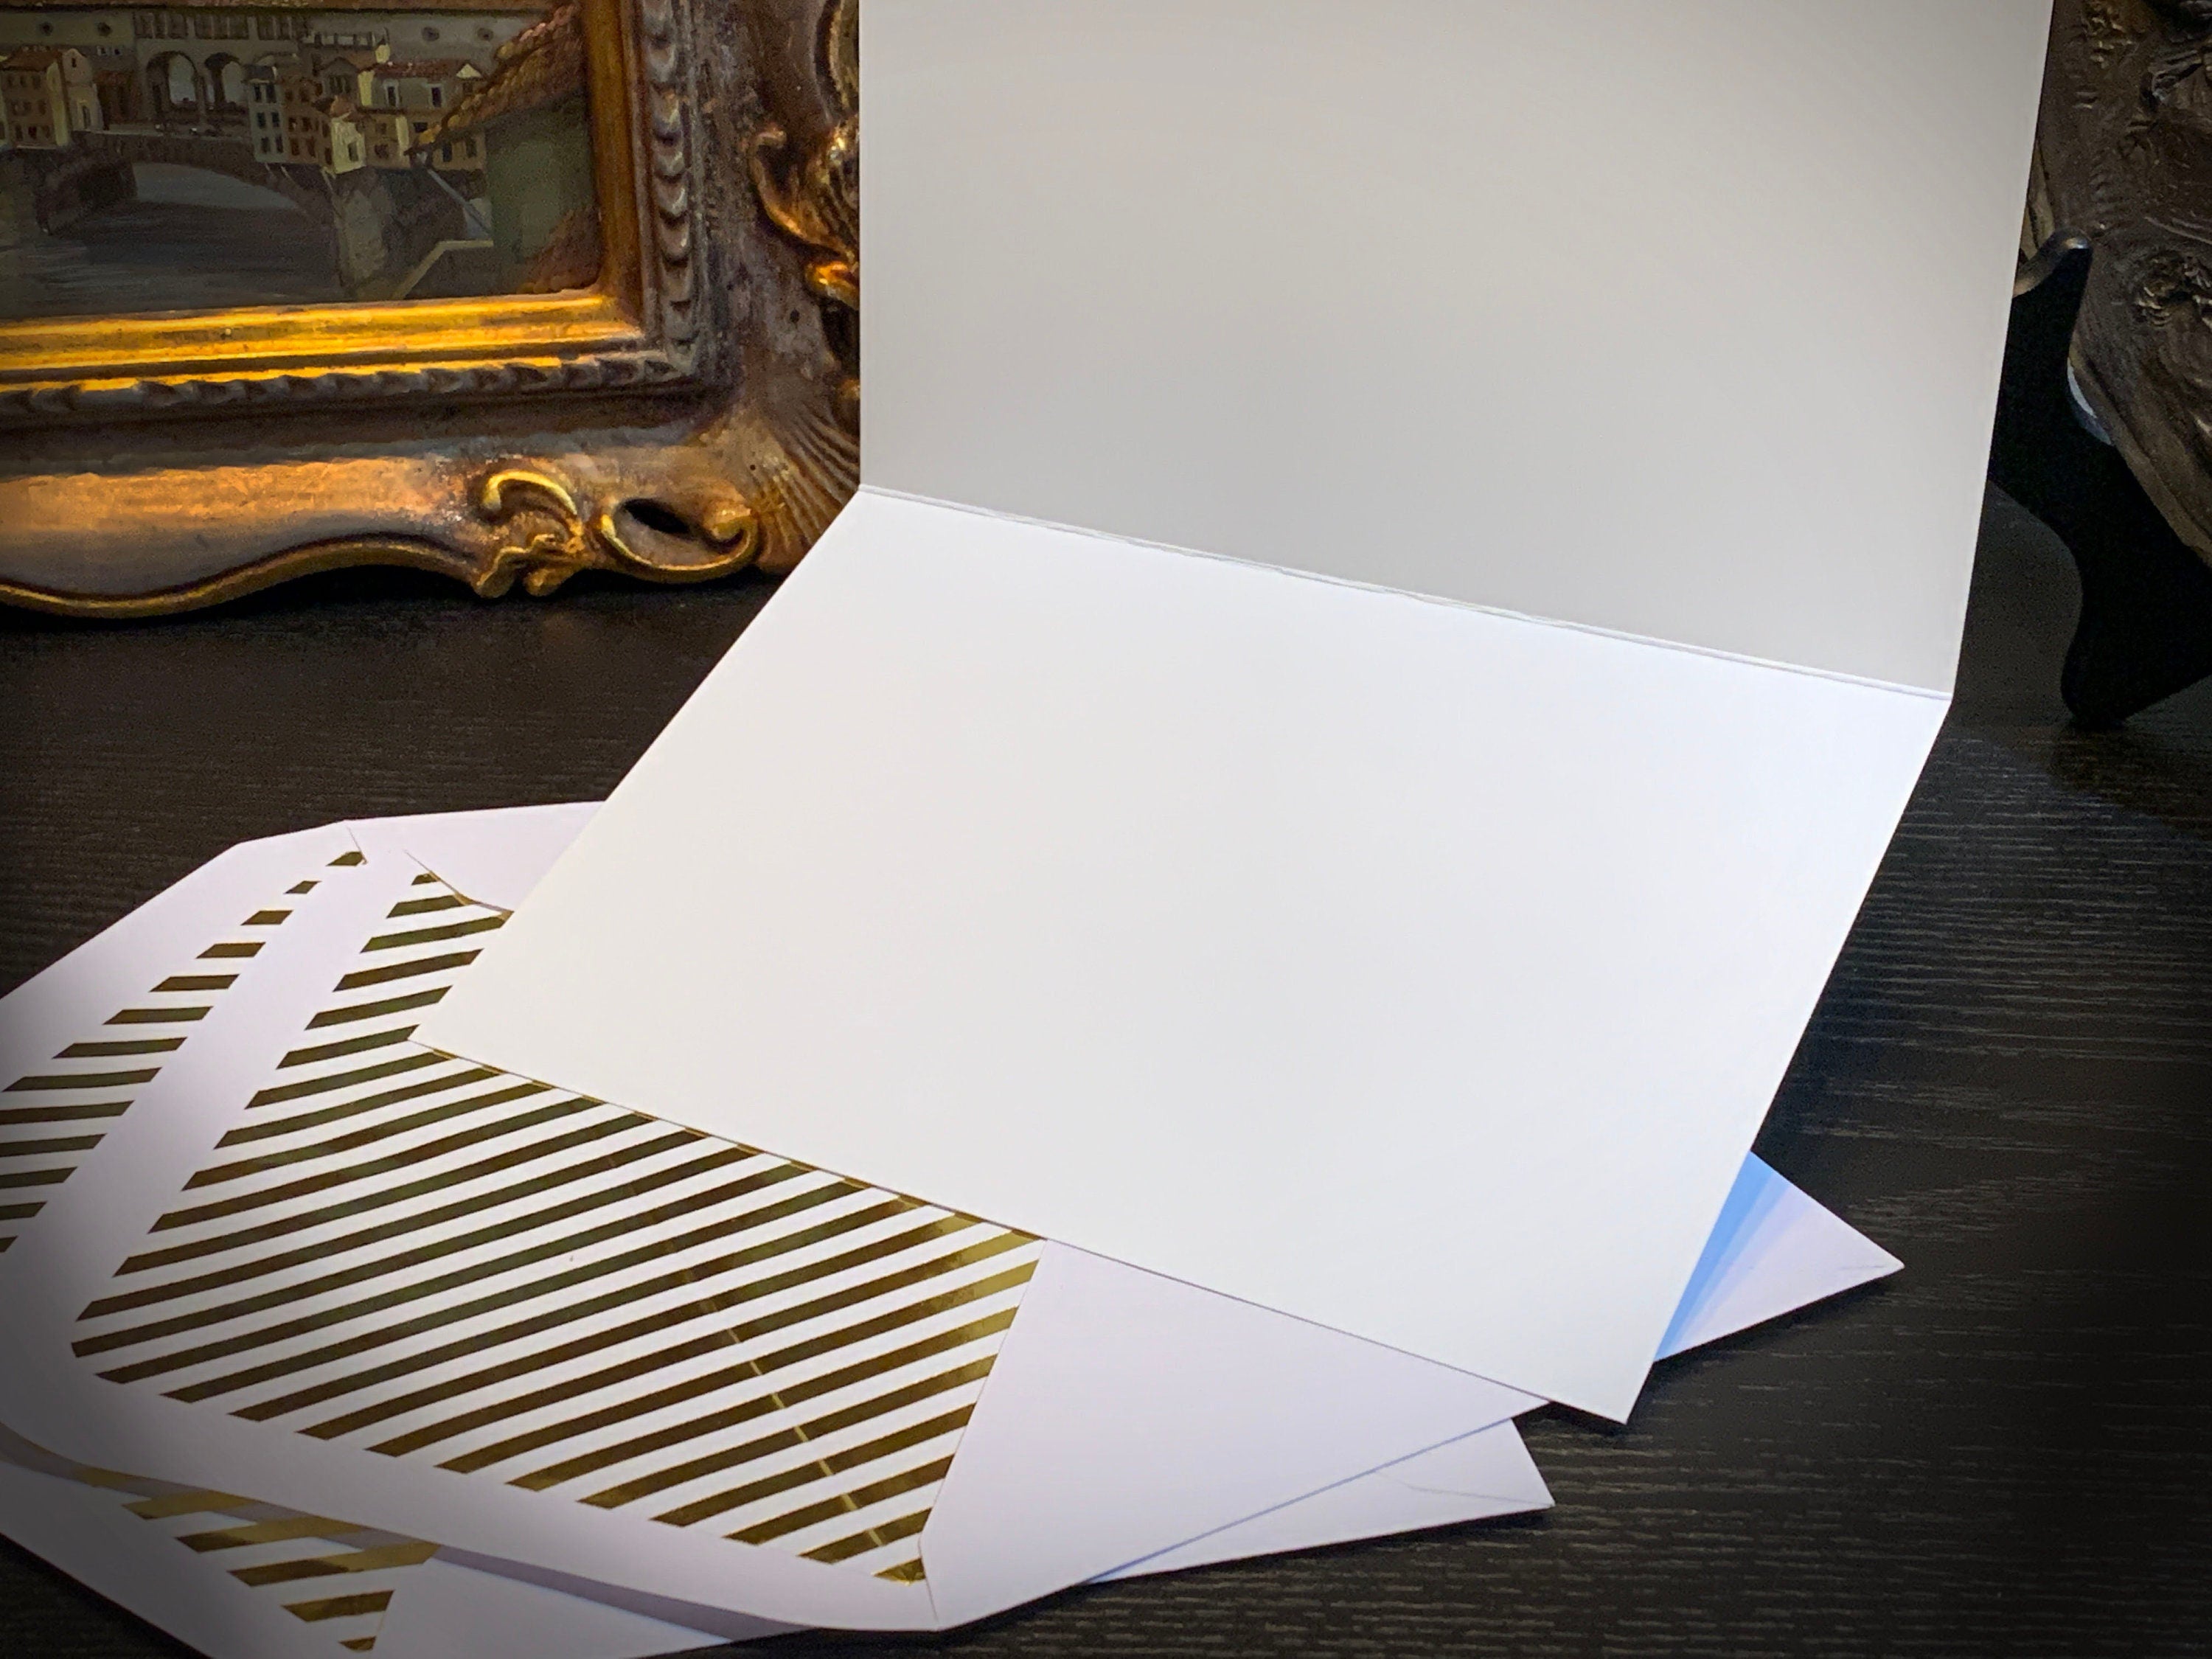 Vanitas, Dark Academia, Everyday Greeting Cards with Elegant Striped Gold Foil Envelopes, 5in x 7in, Set of 5 Cards/Envelopes